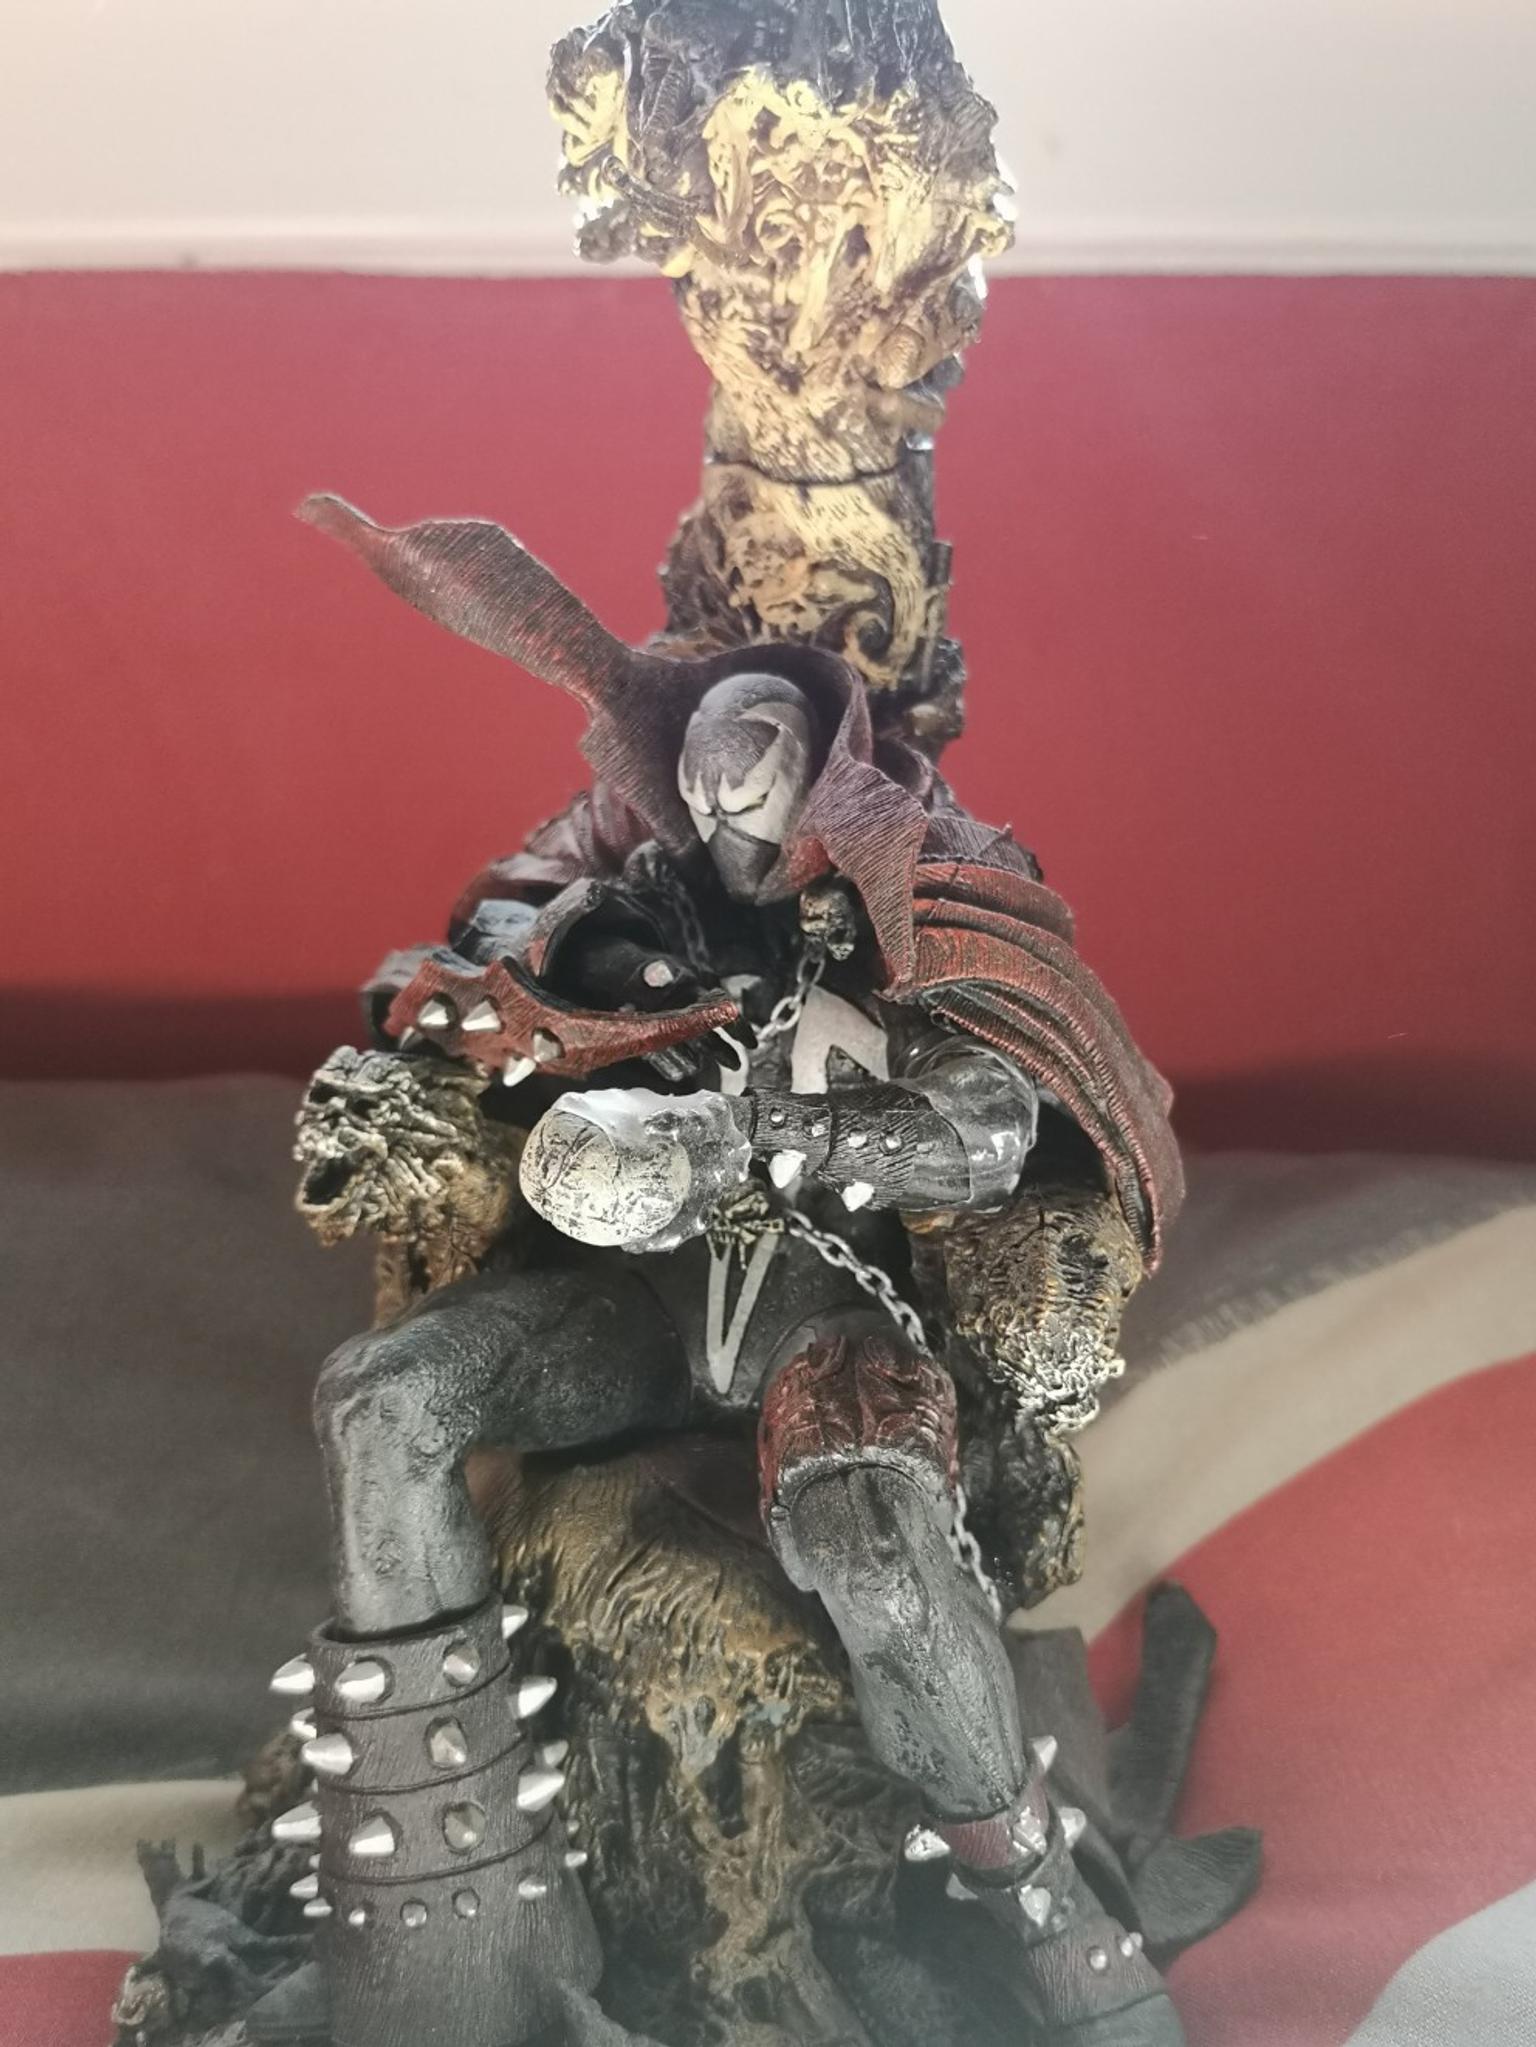 spawn throne figure